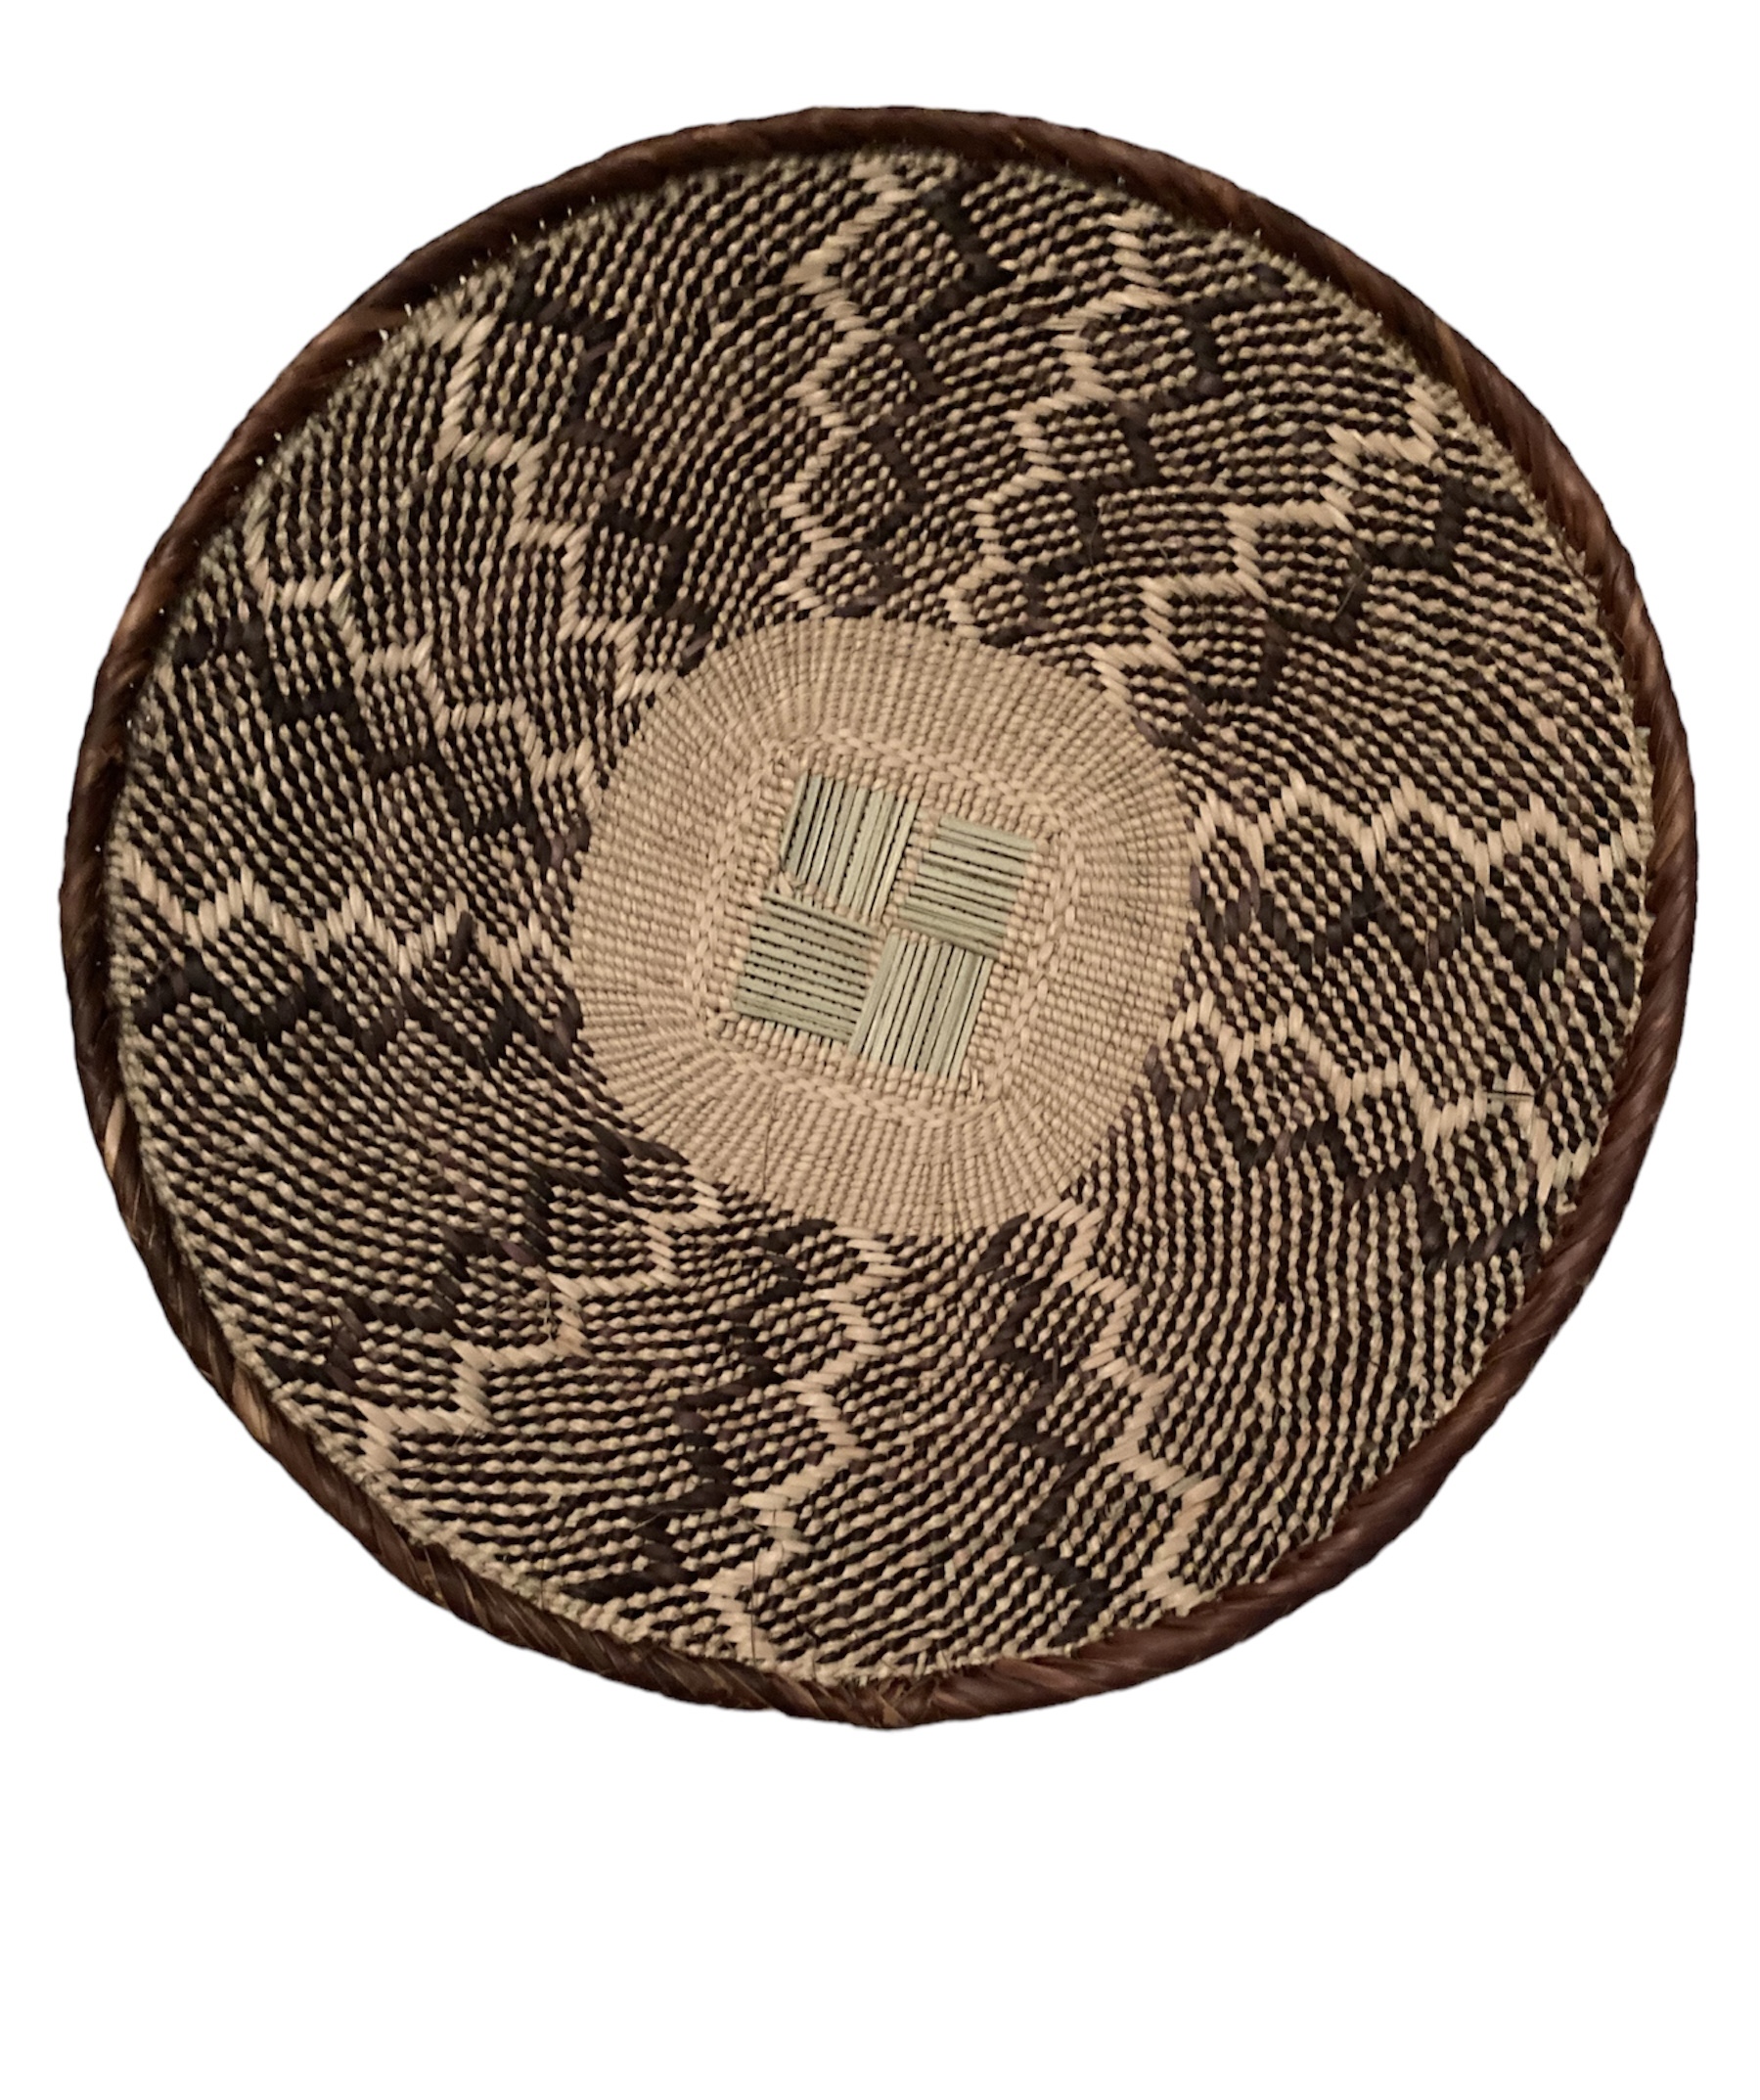 Tonga Basket from Zimbabwe - Design #006 - 15" dia.